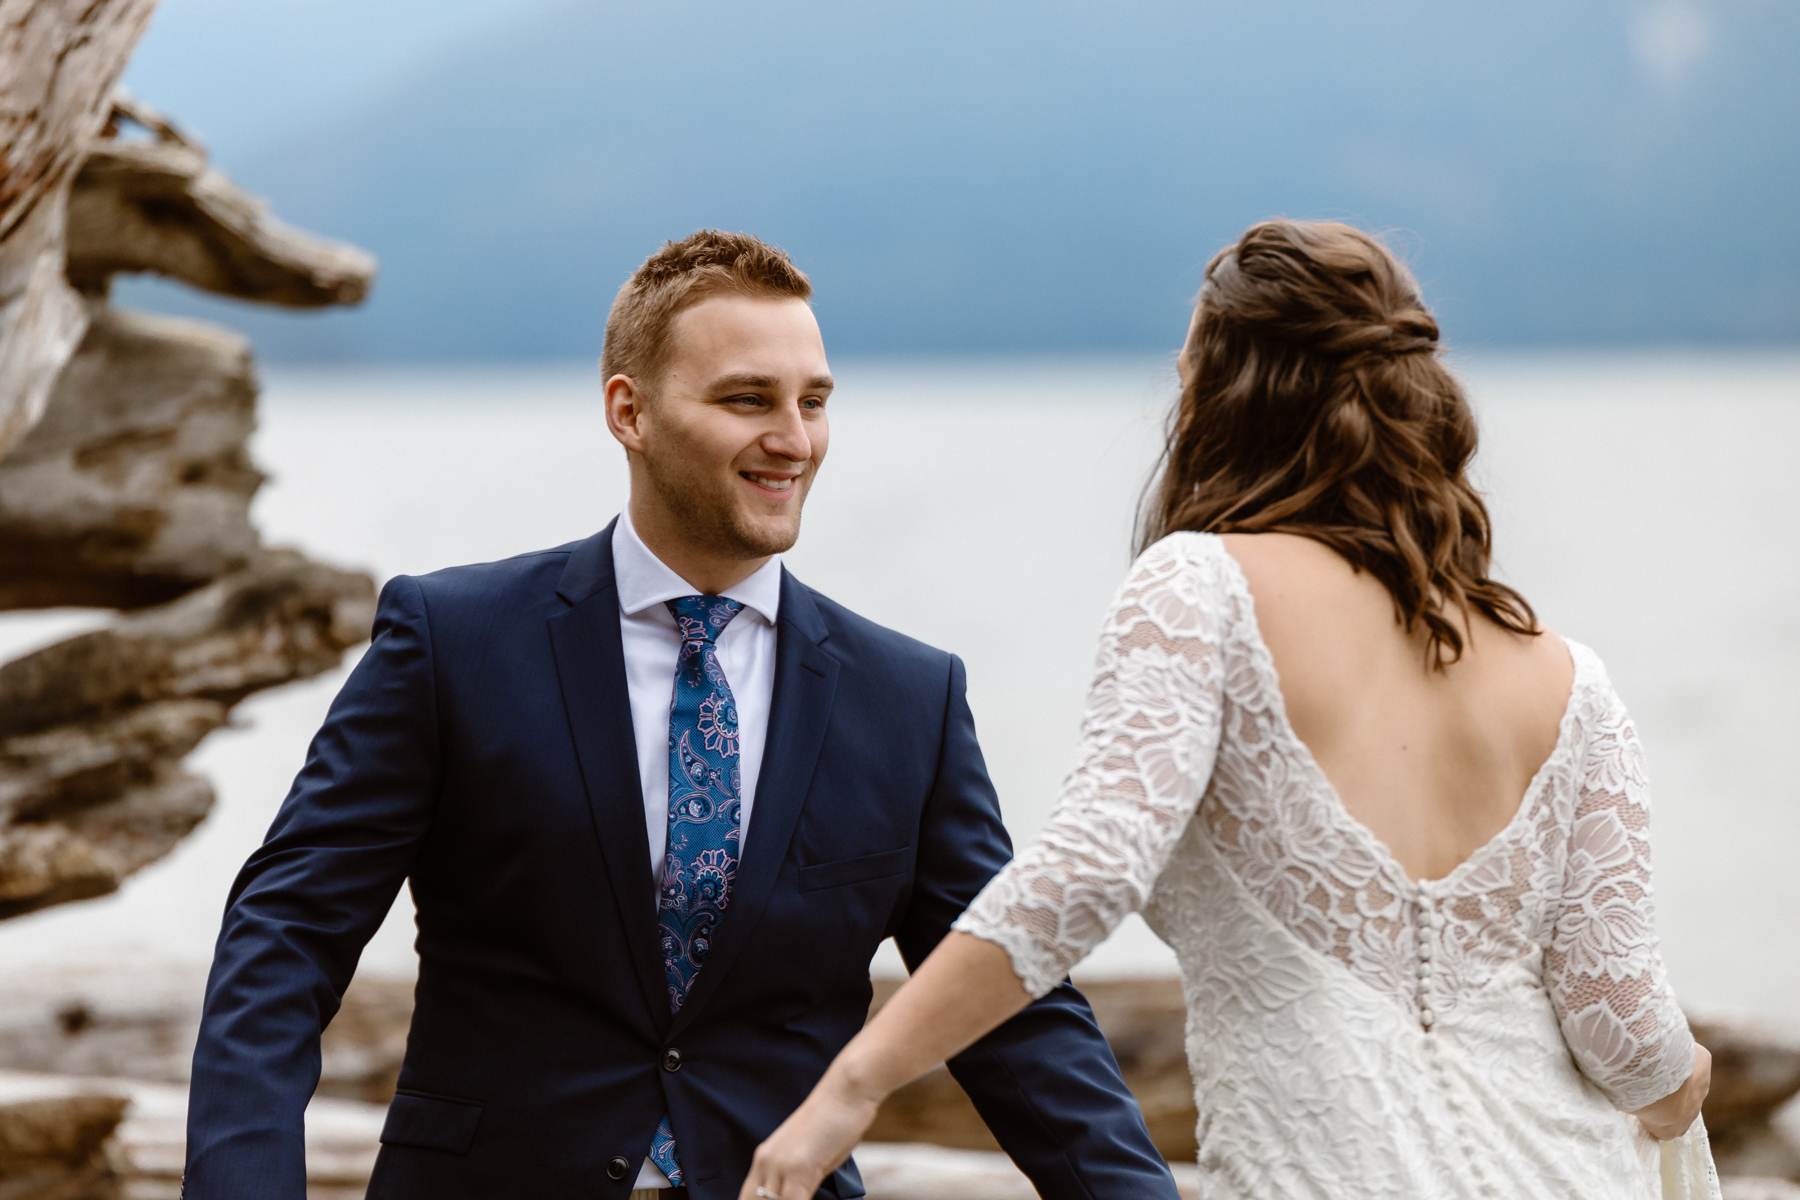 Squamish Wedding Photographers at an Adventurous Elopement - Image 4